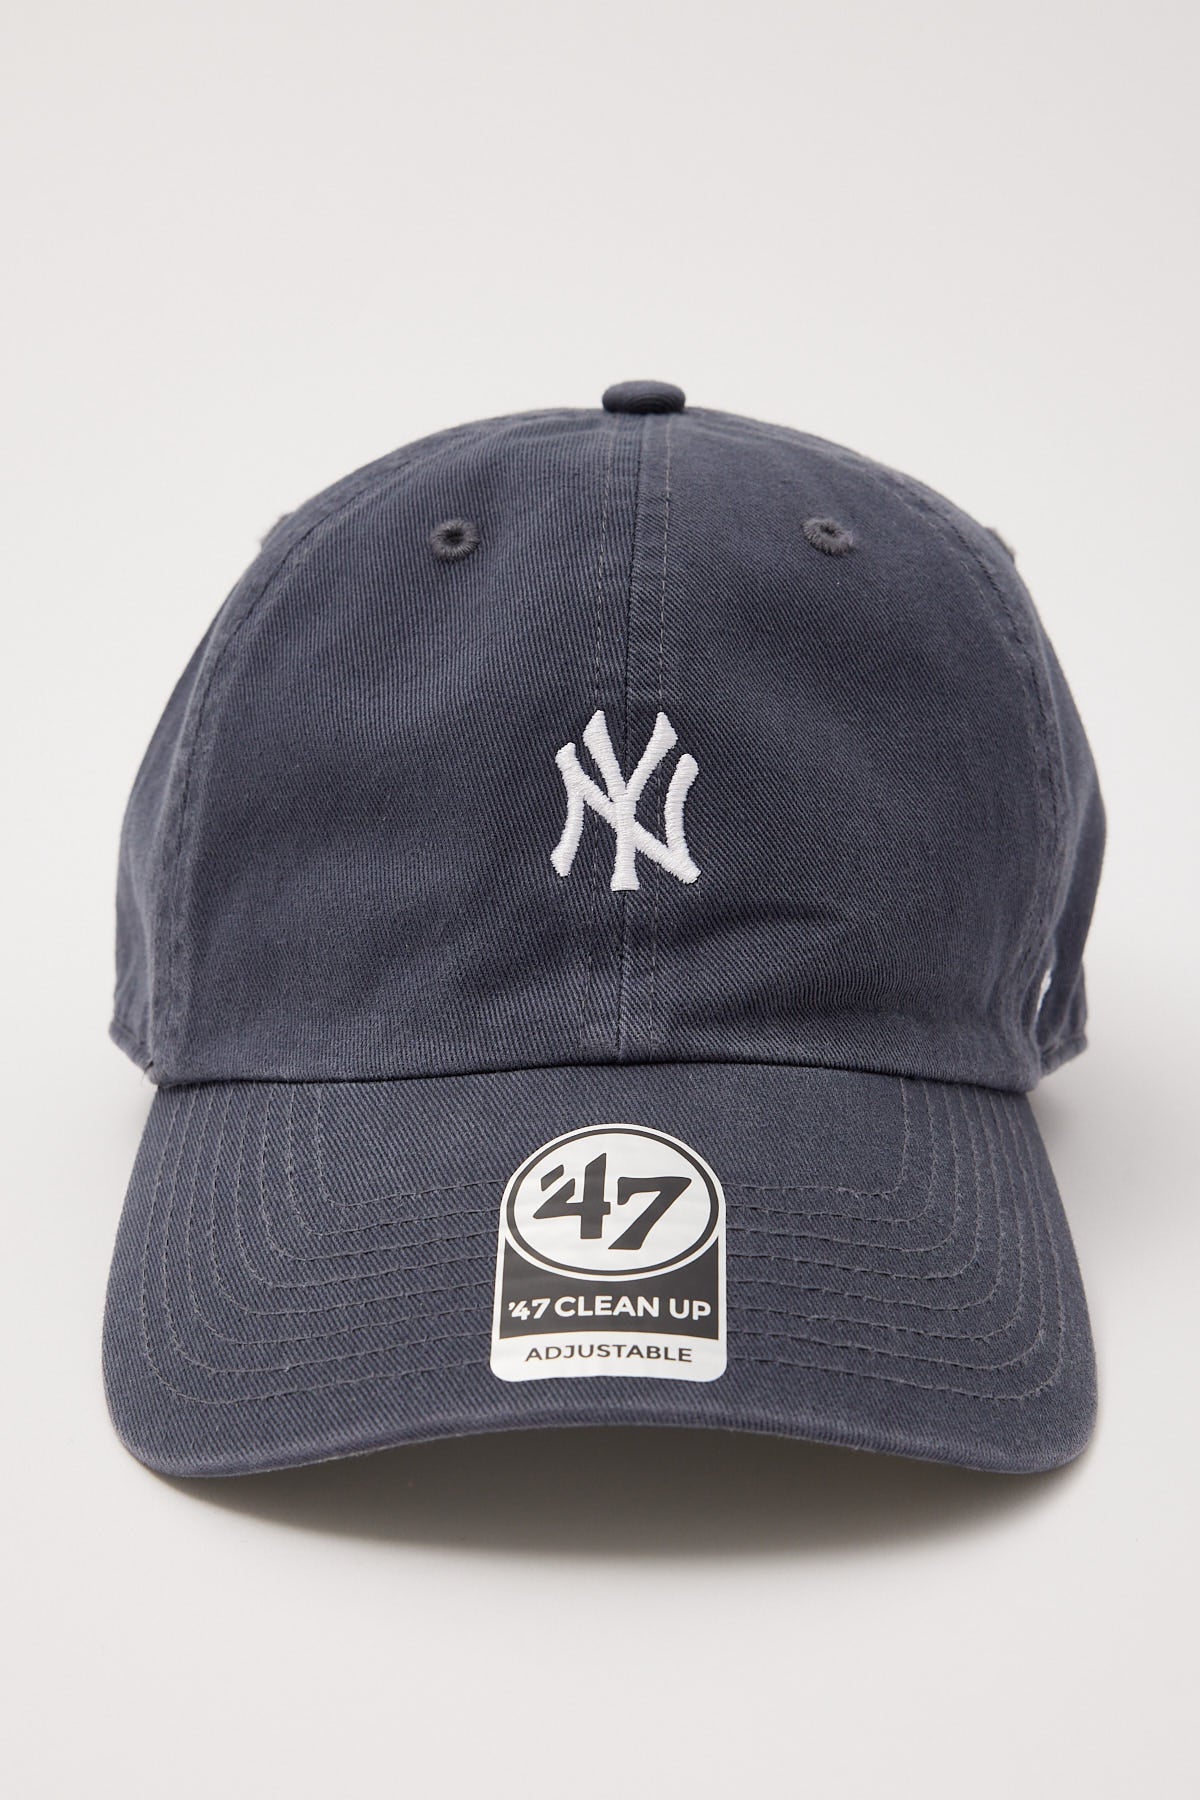 47 Brand Base Runner 47 Clean Up NY Yankees Vintage Navy